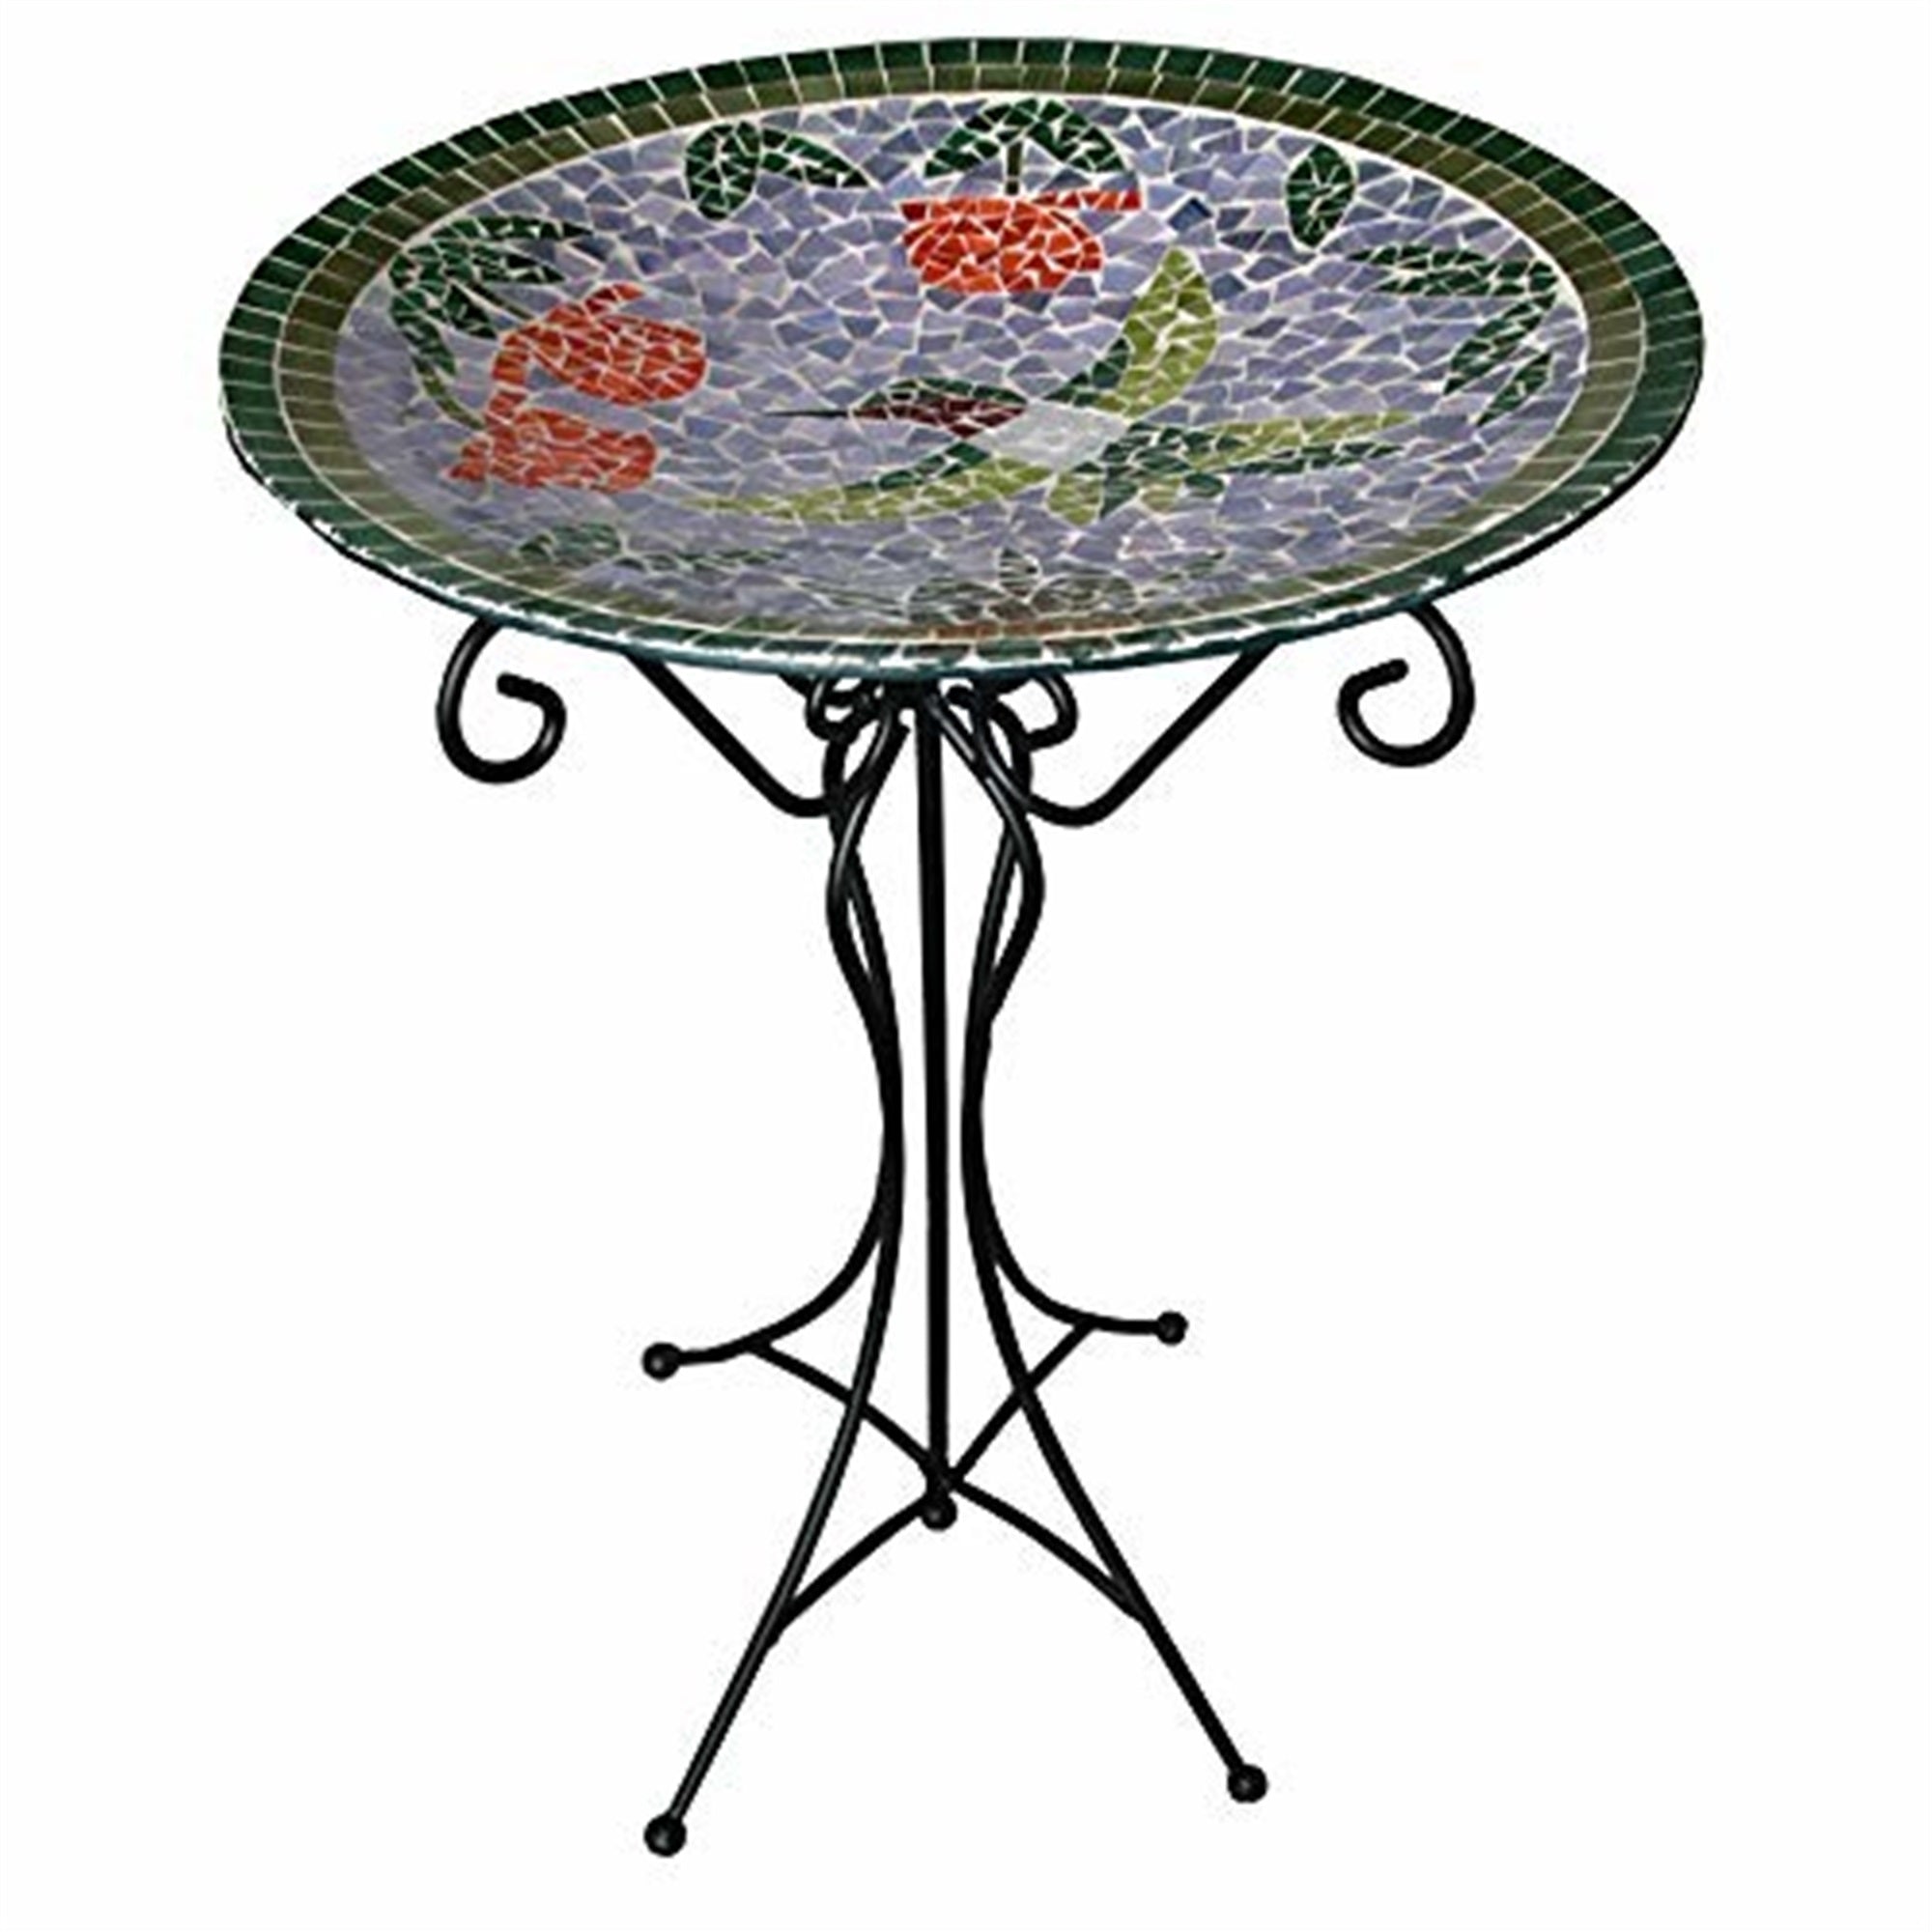 Gardener's Select Mosaic Glass Bird Bath with Hummingbird Design